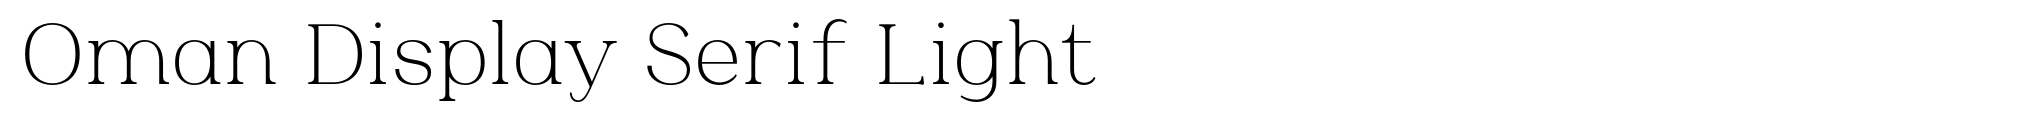 Oman Display Serif Light image